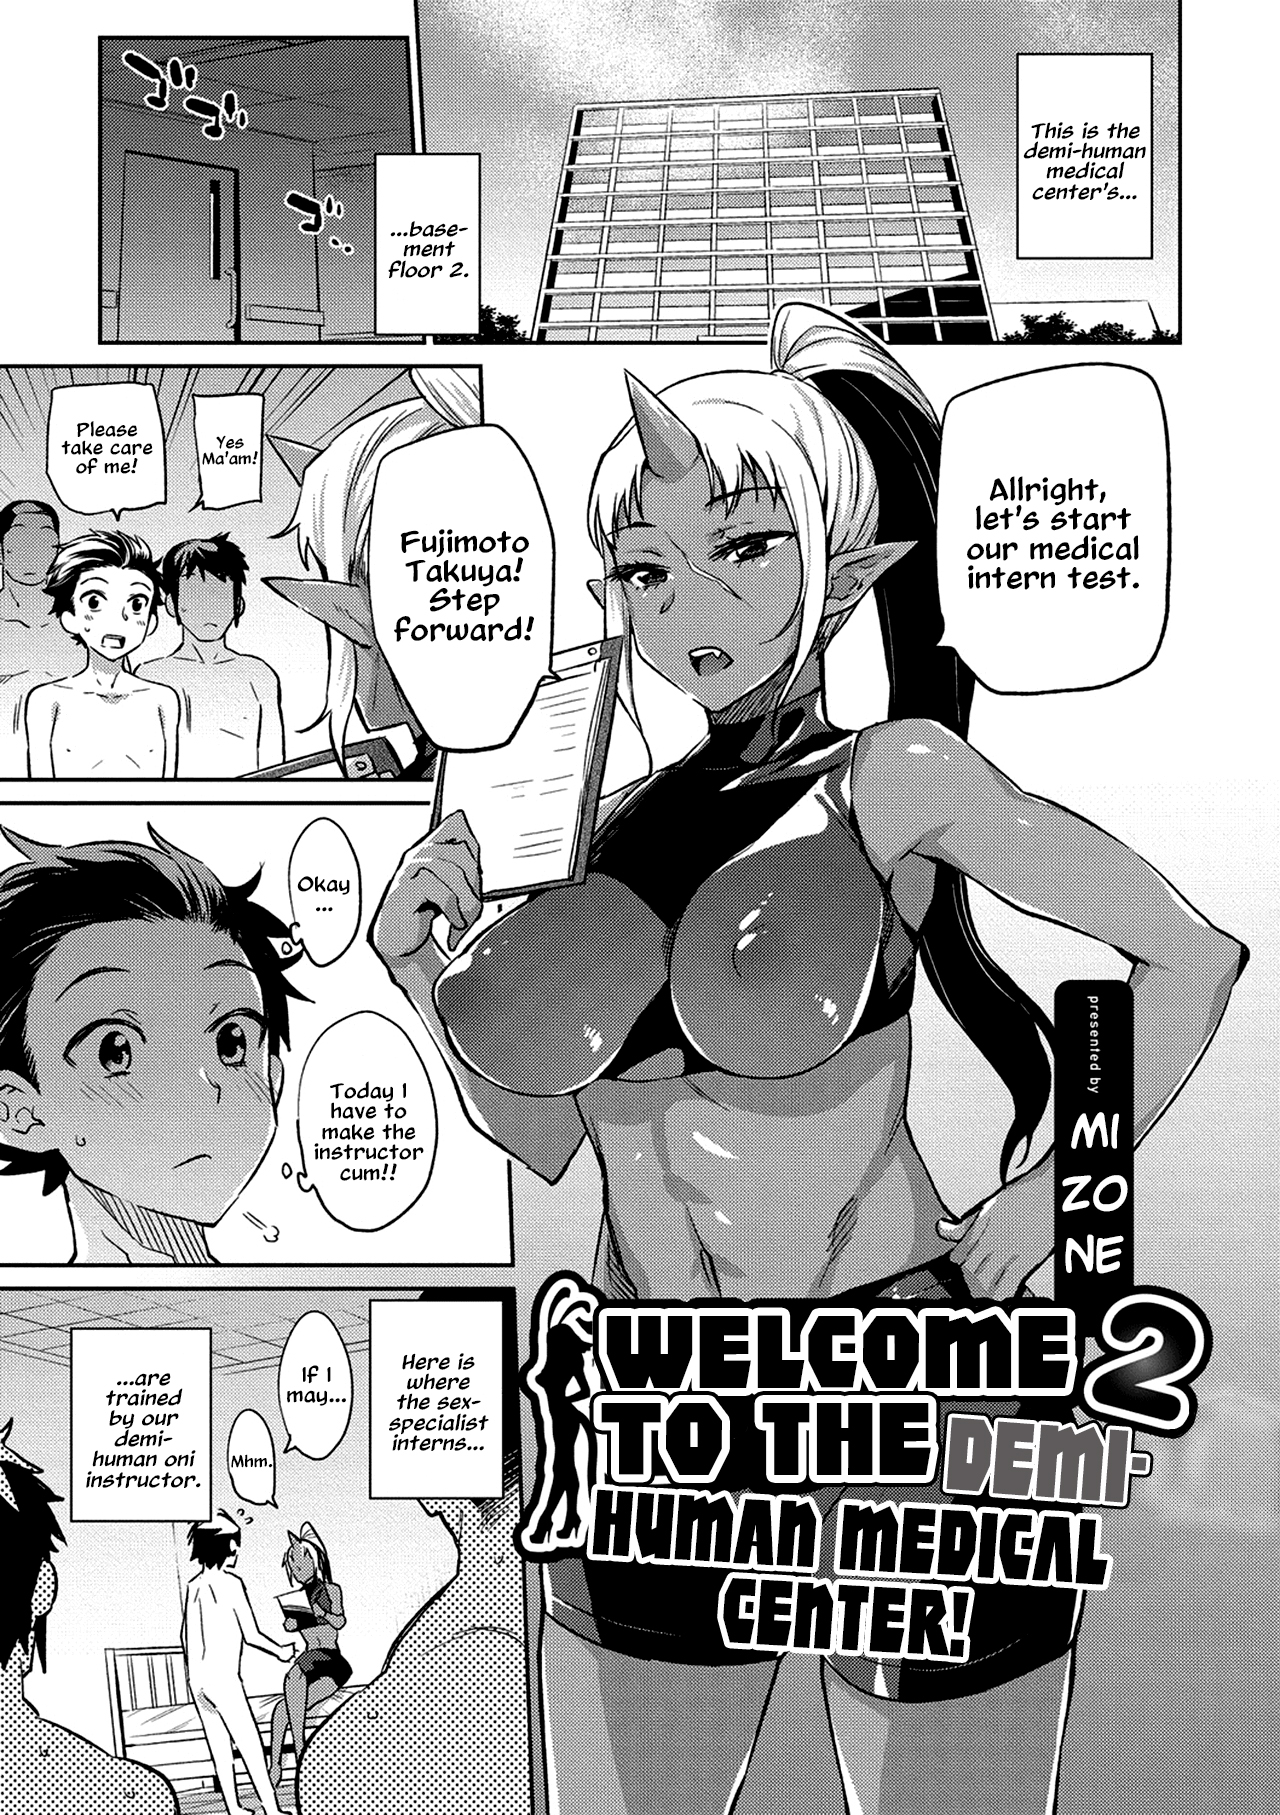 Mizone - Welcome to the Demi-Human Medical Center 2 Hentai Comics